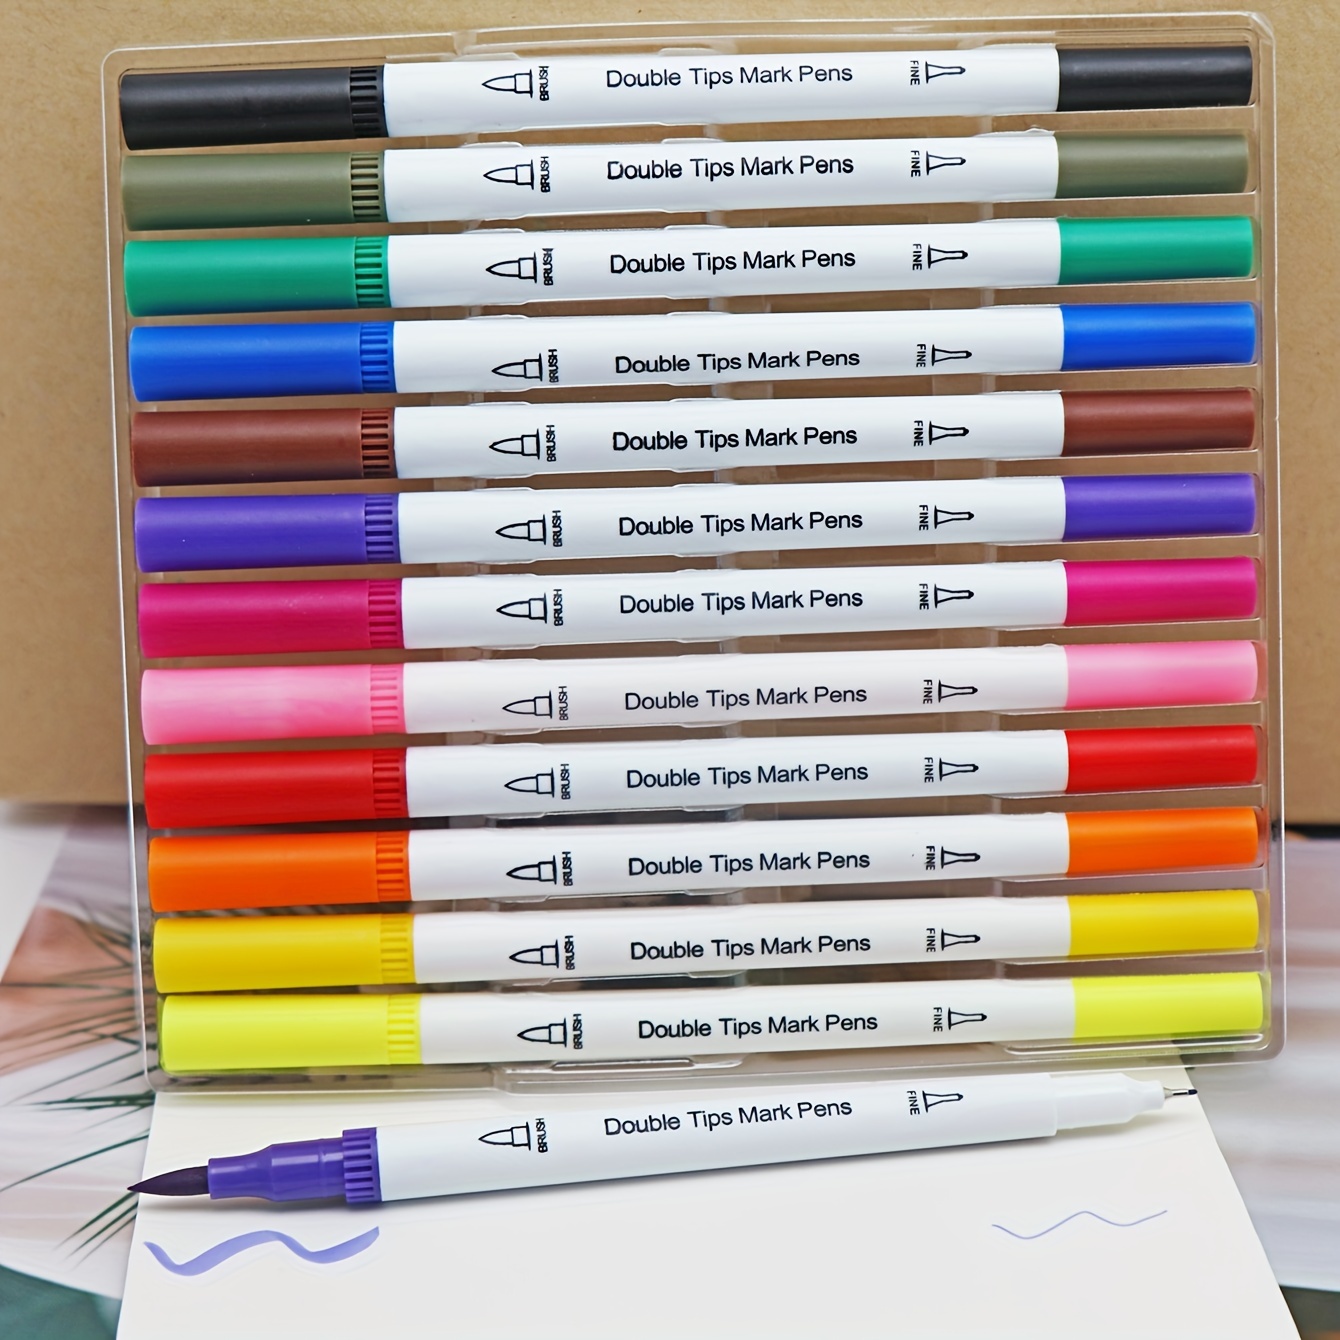 Tergayee Brush Marker Pens,Coloring Brush Art Marker,Fine Tip Colored Pens for Kids,Bullet Journaling Drawing Planner,Student Office Use, Size: 14.5